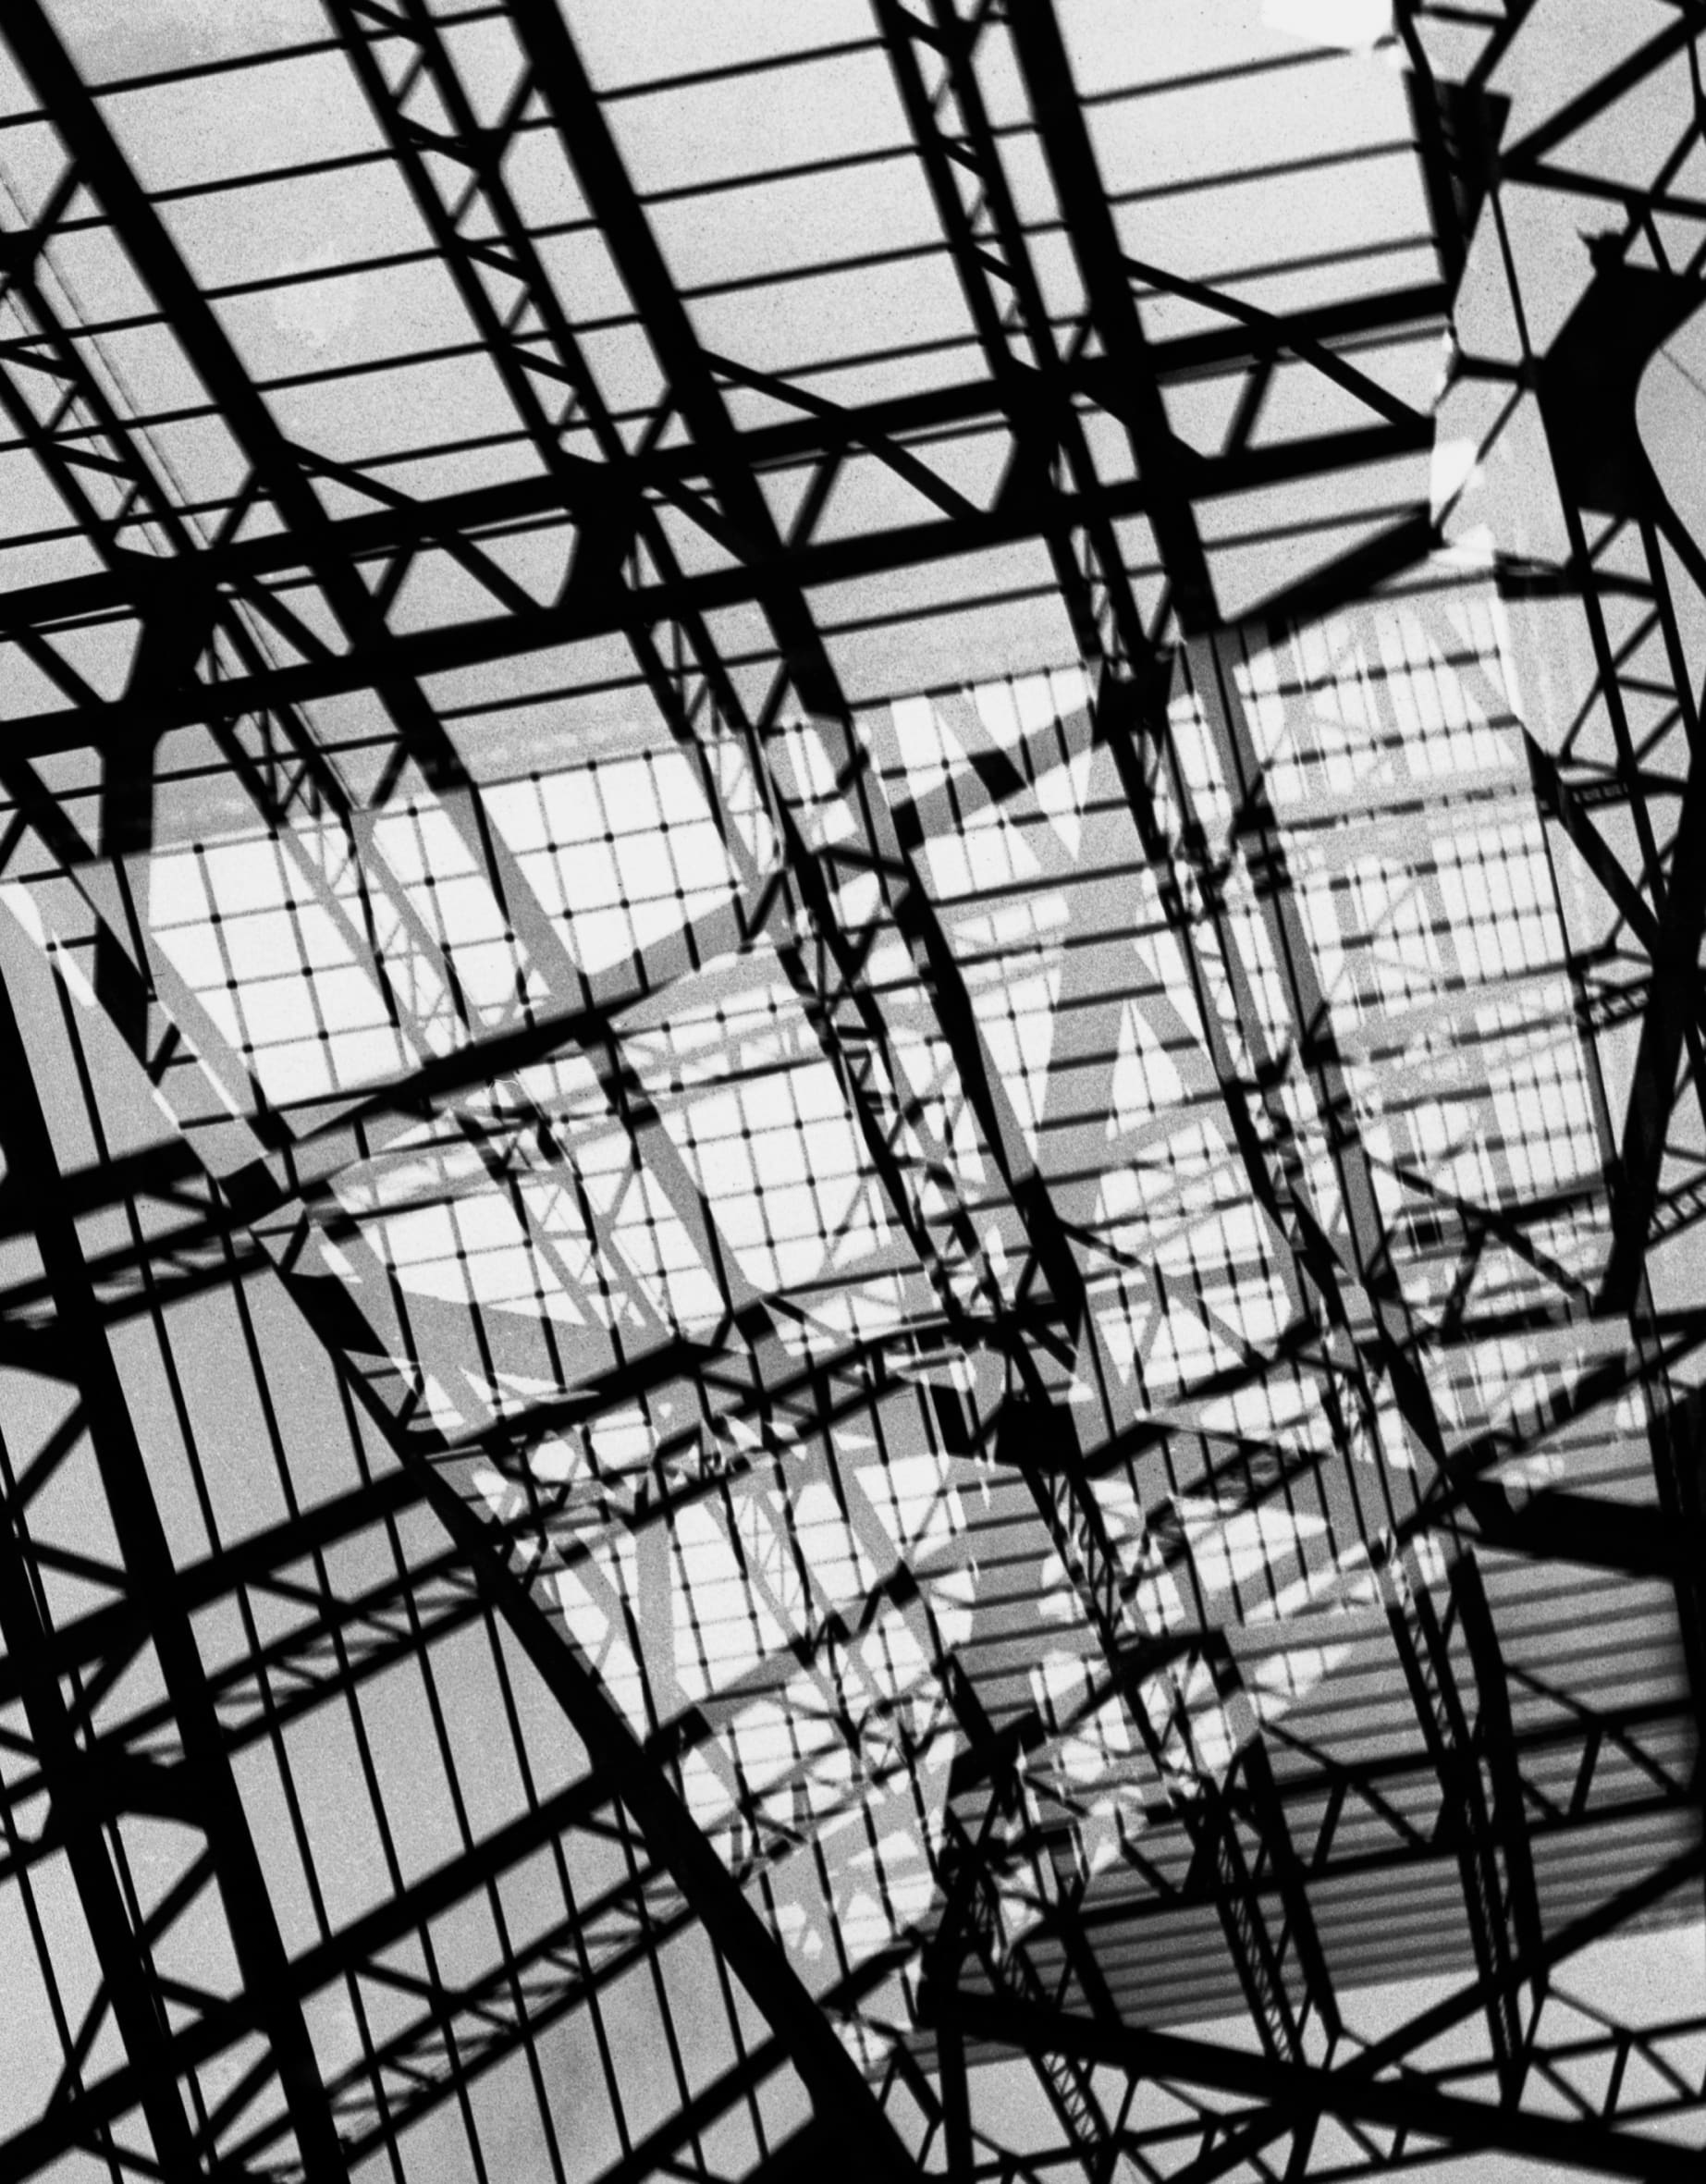 Serie Fotoforma, Gare de Sao Paulo